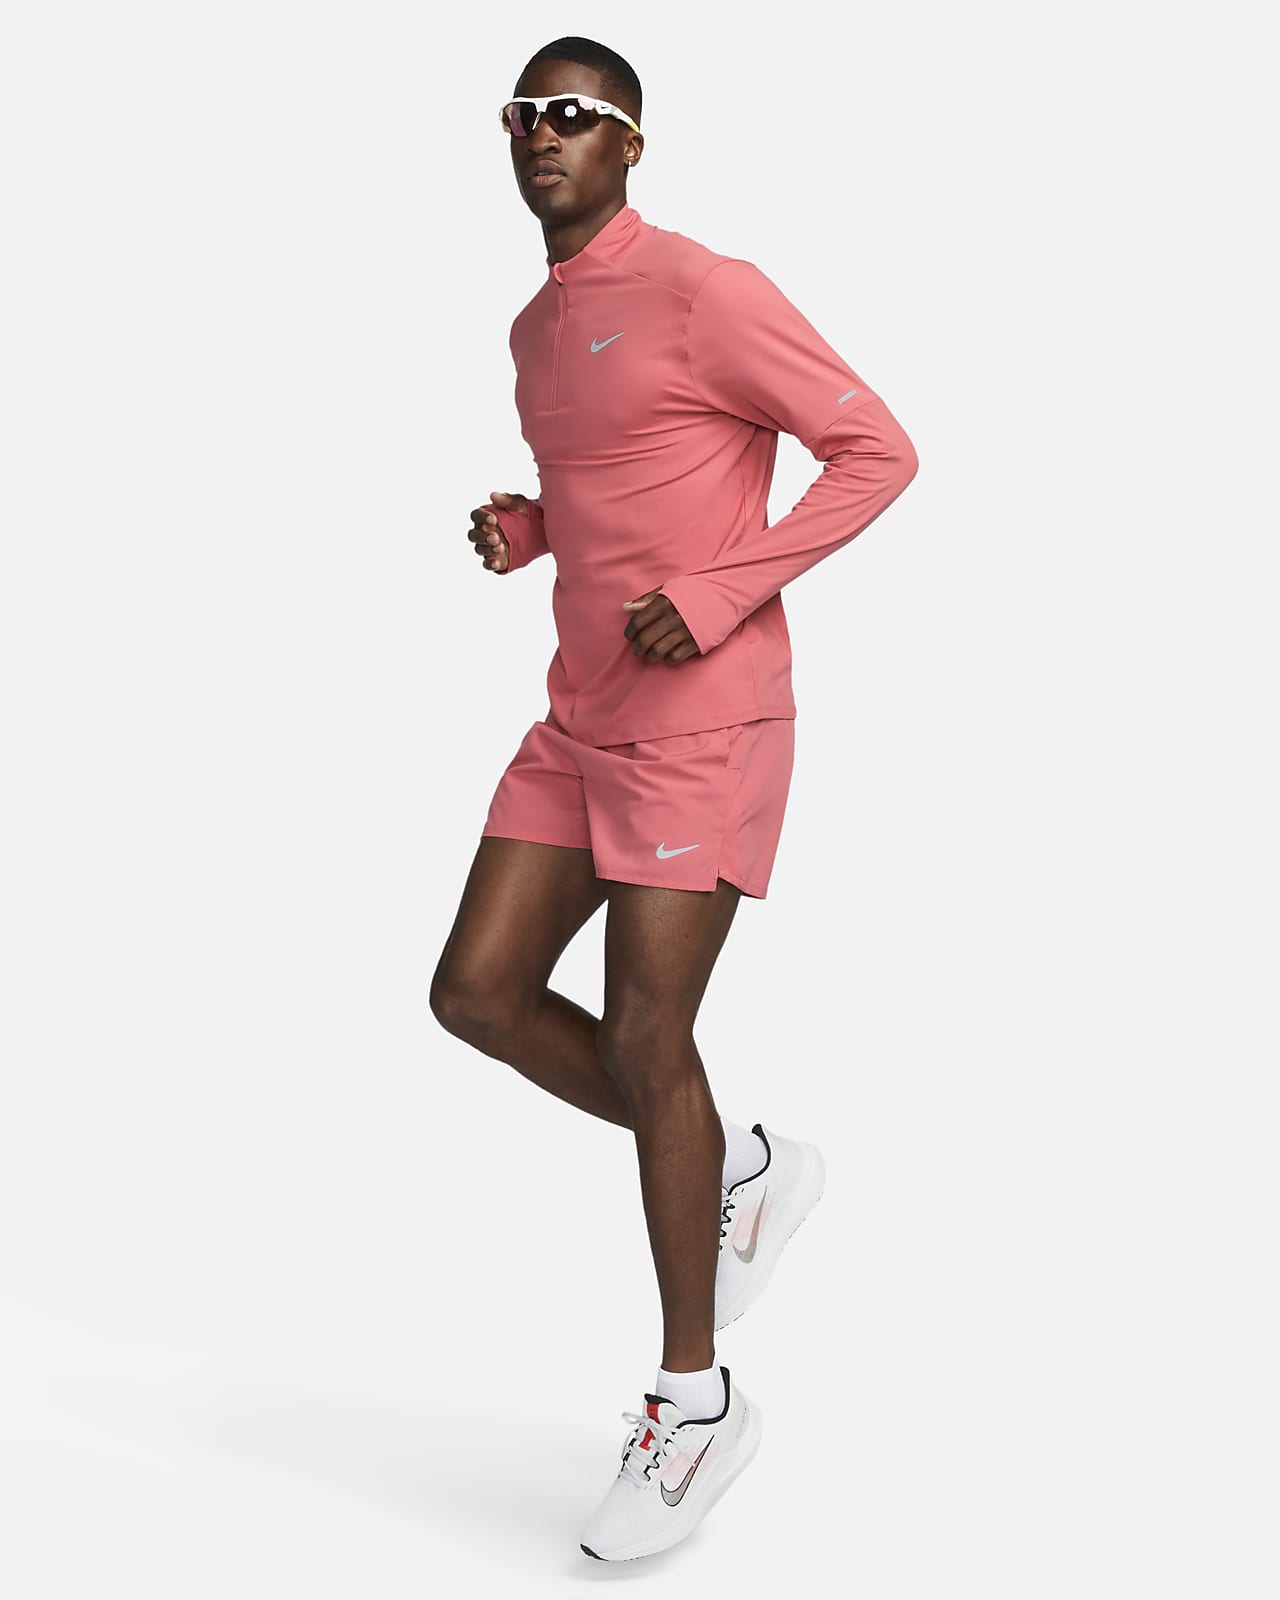 Pack Nike Dry Element pour Femme. Running